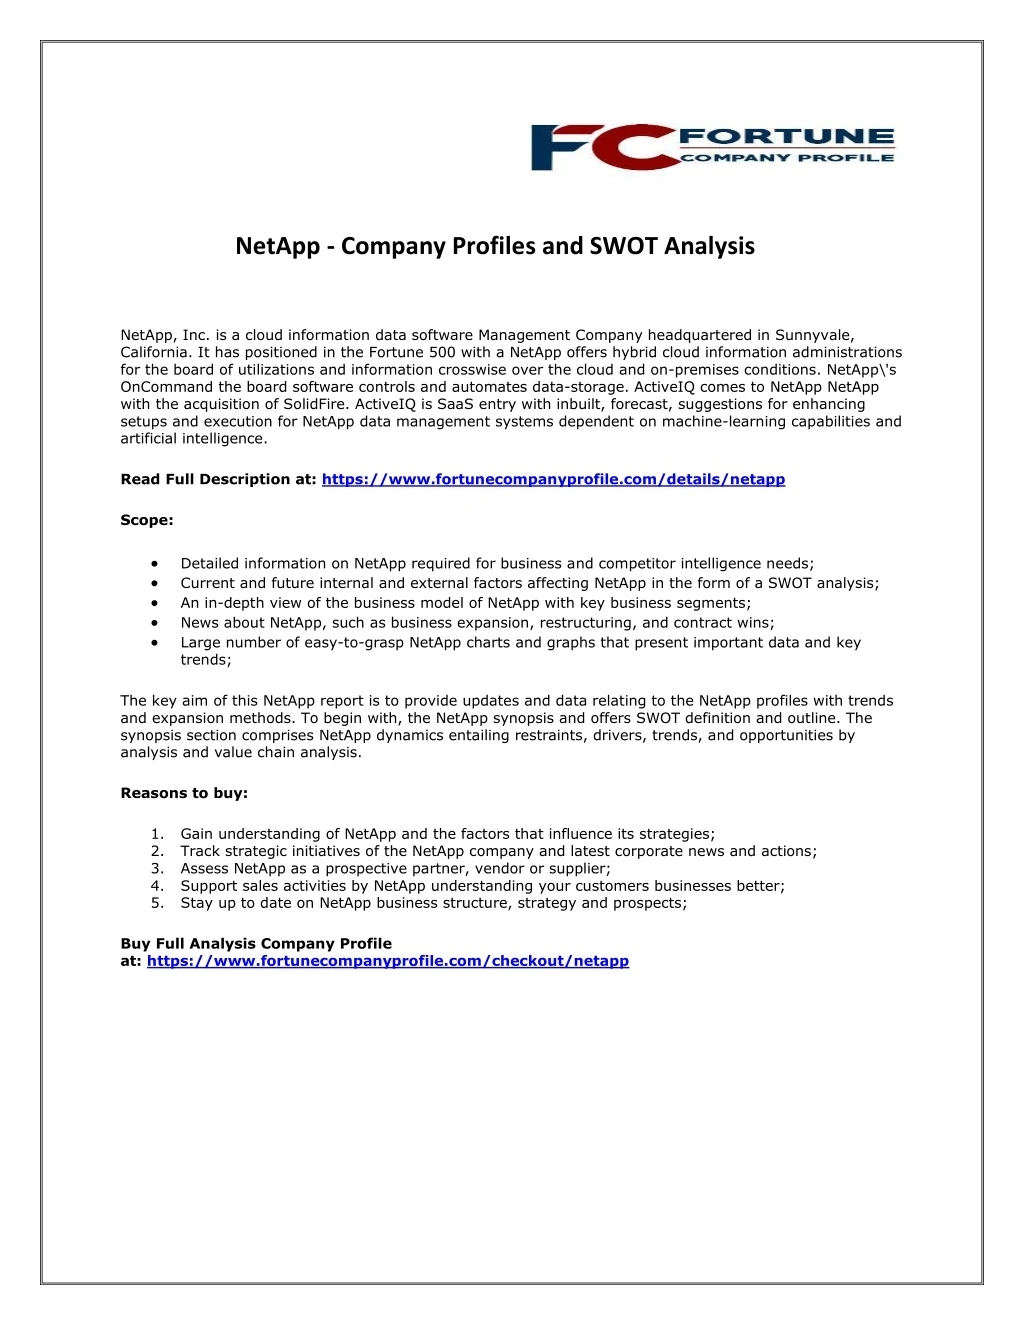 netapp company profiles and swot analysis